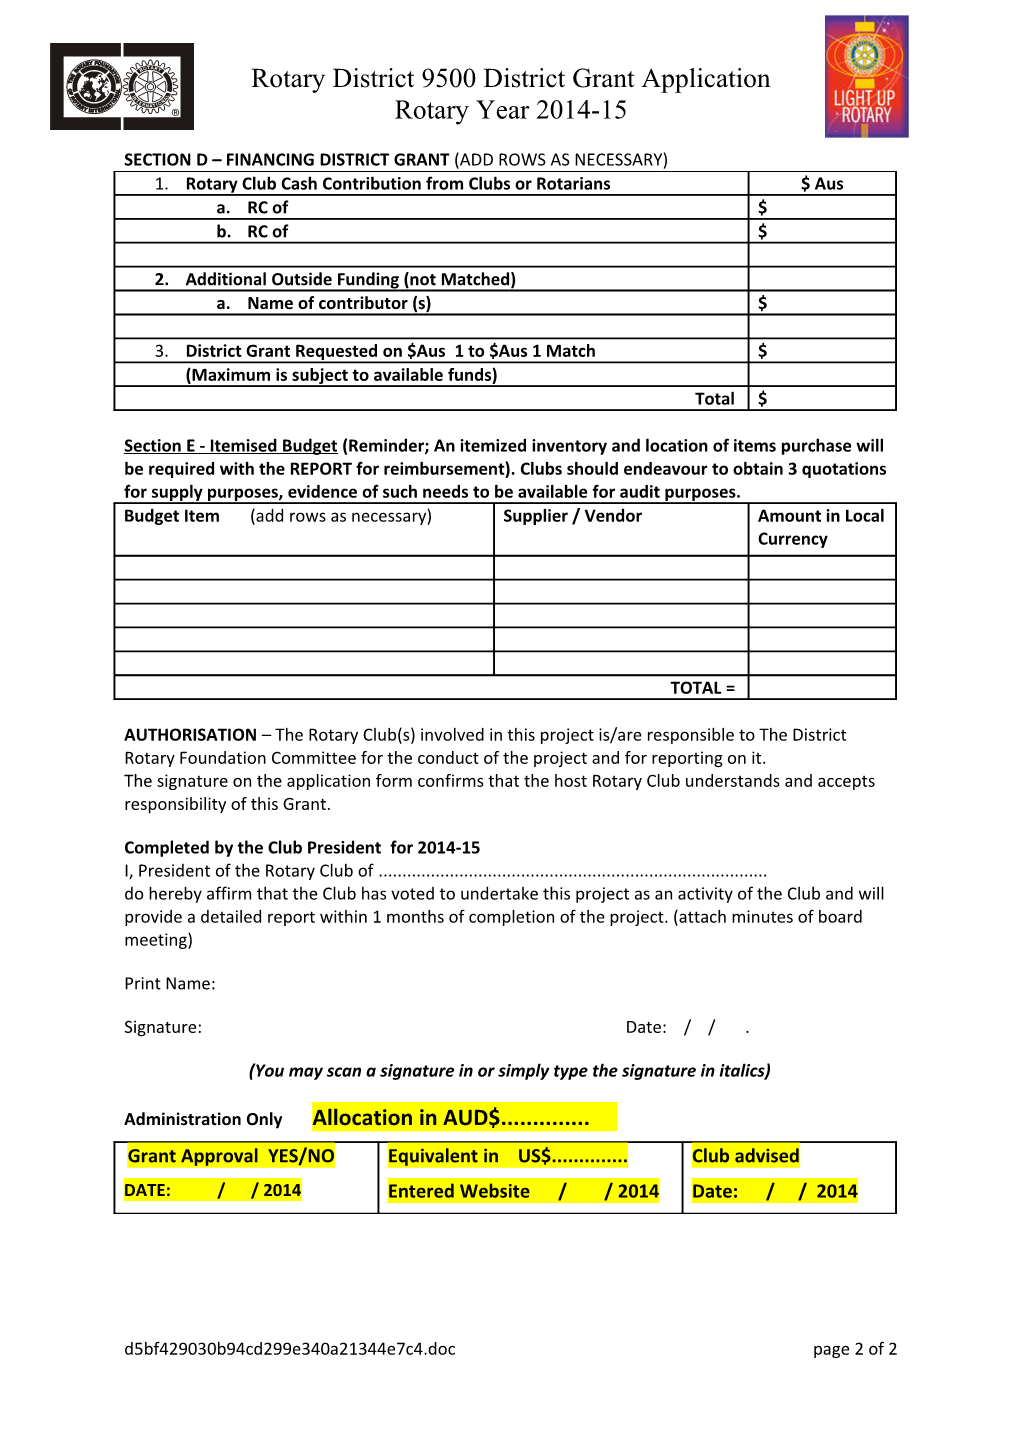 District Grant Application Form 2010-2011